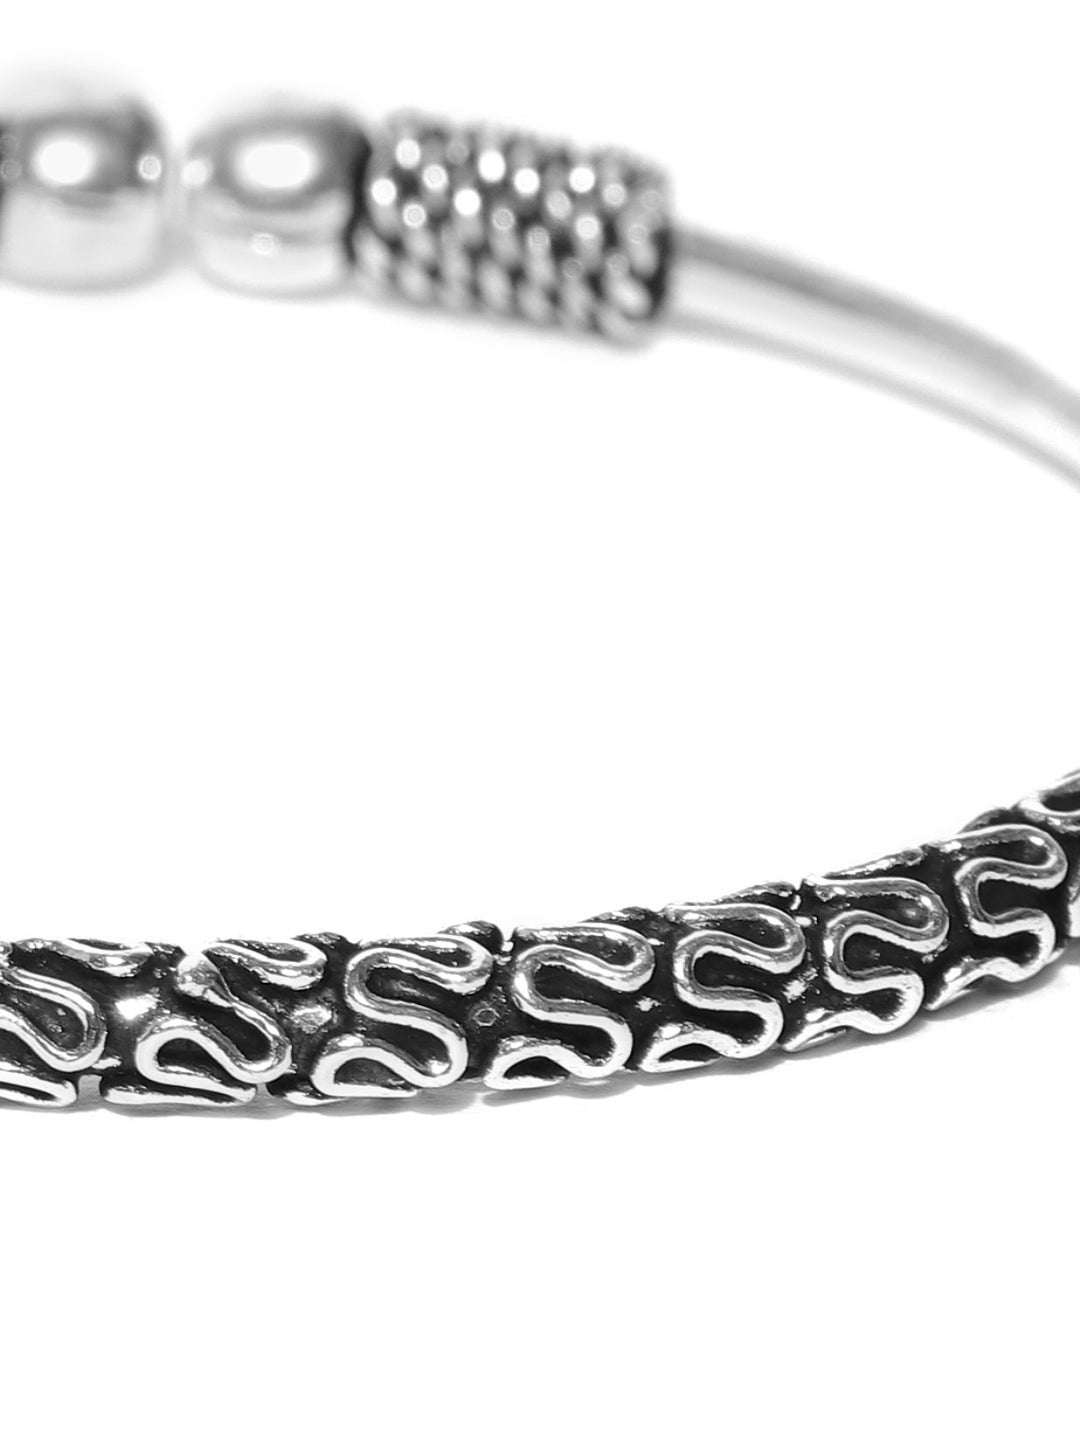 Oxidized German Silver Bracelet For Girls And Women